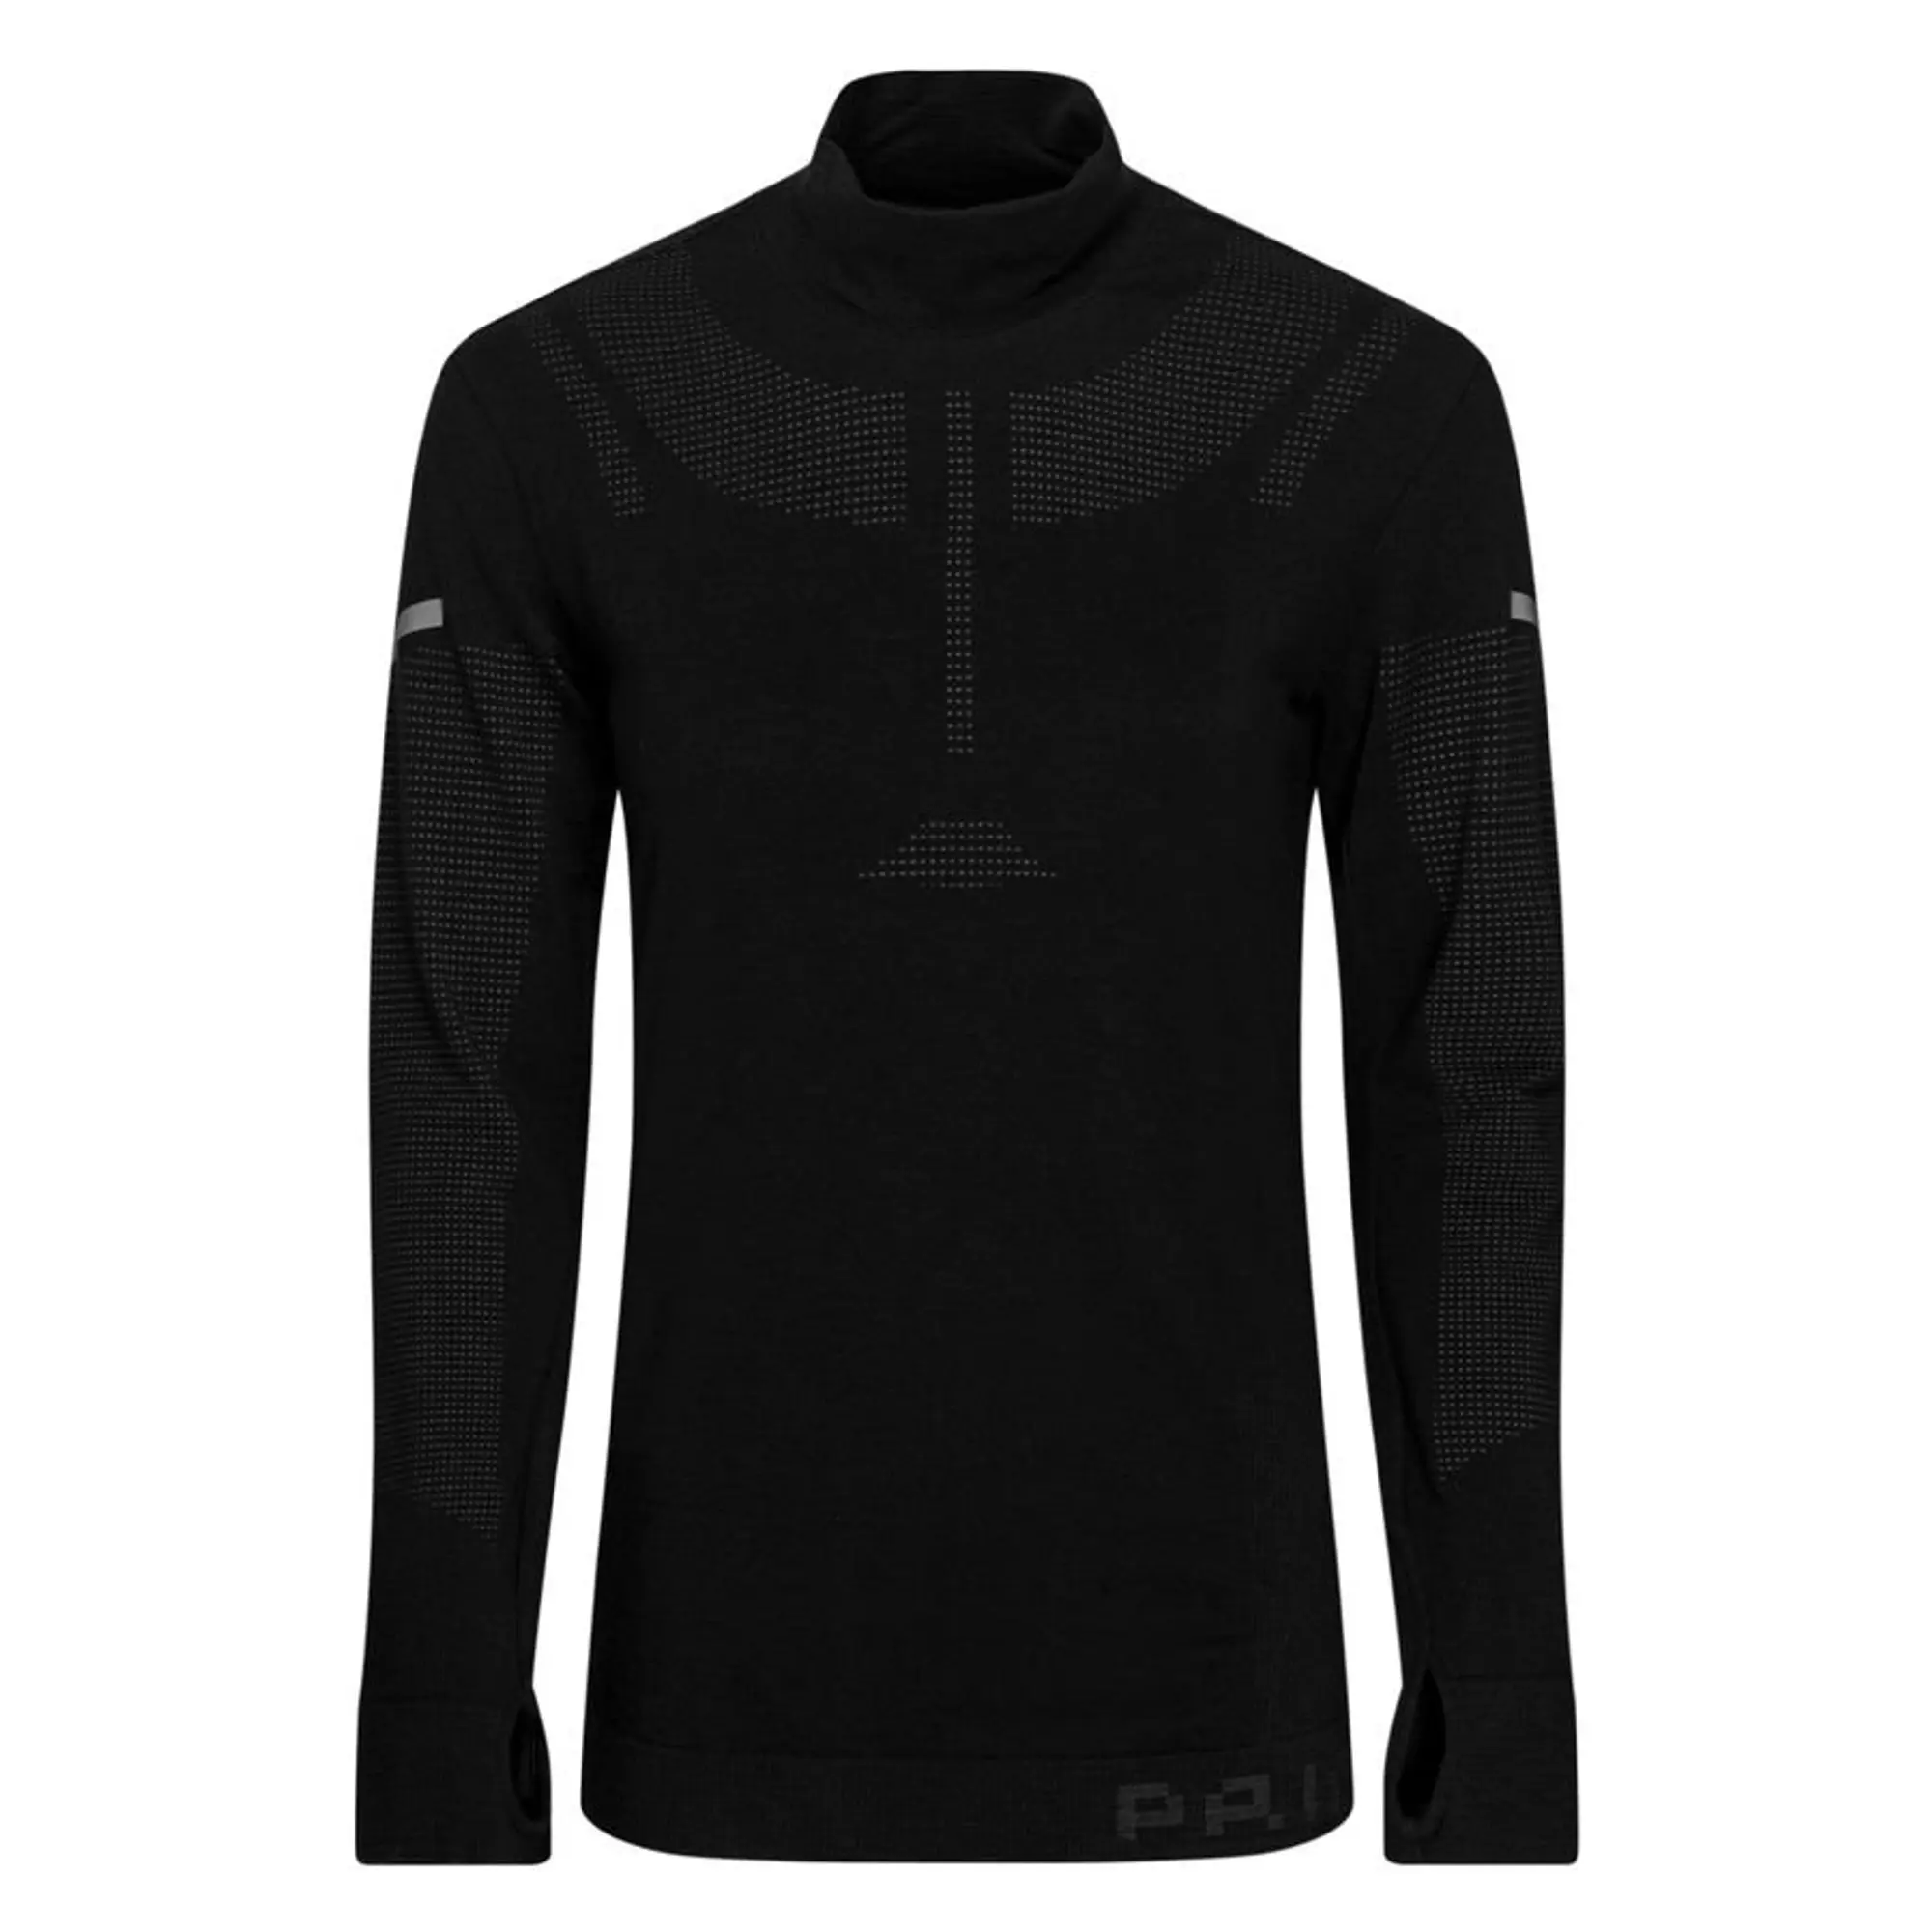 Adidas Running Shirt Primeknit Midlayer - Black